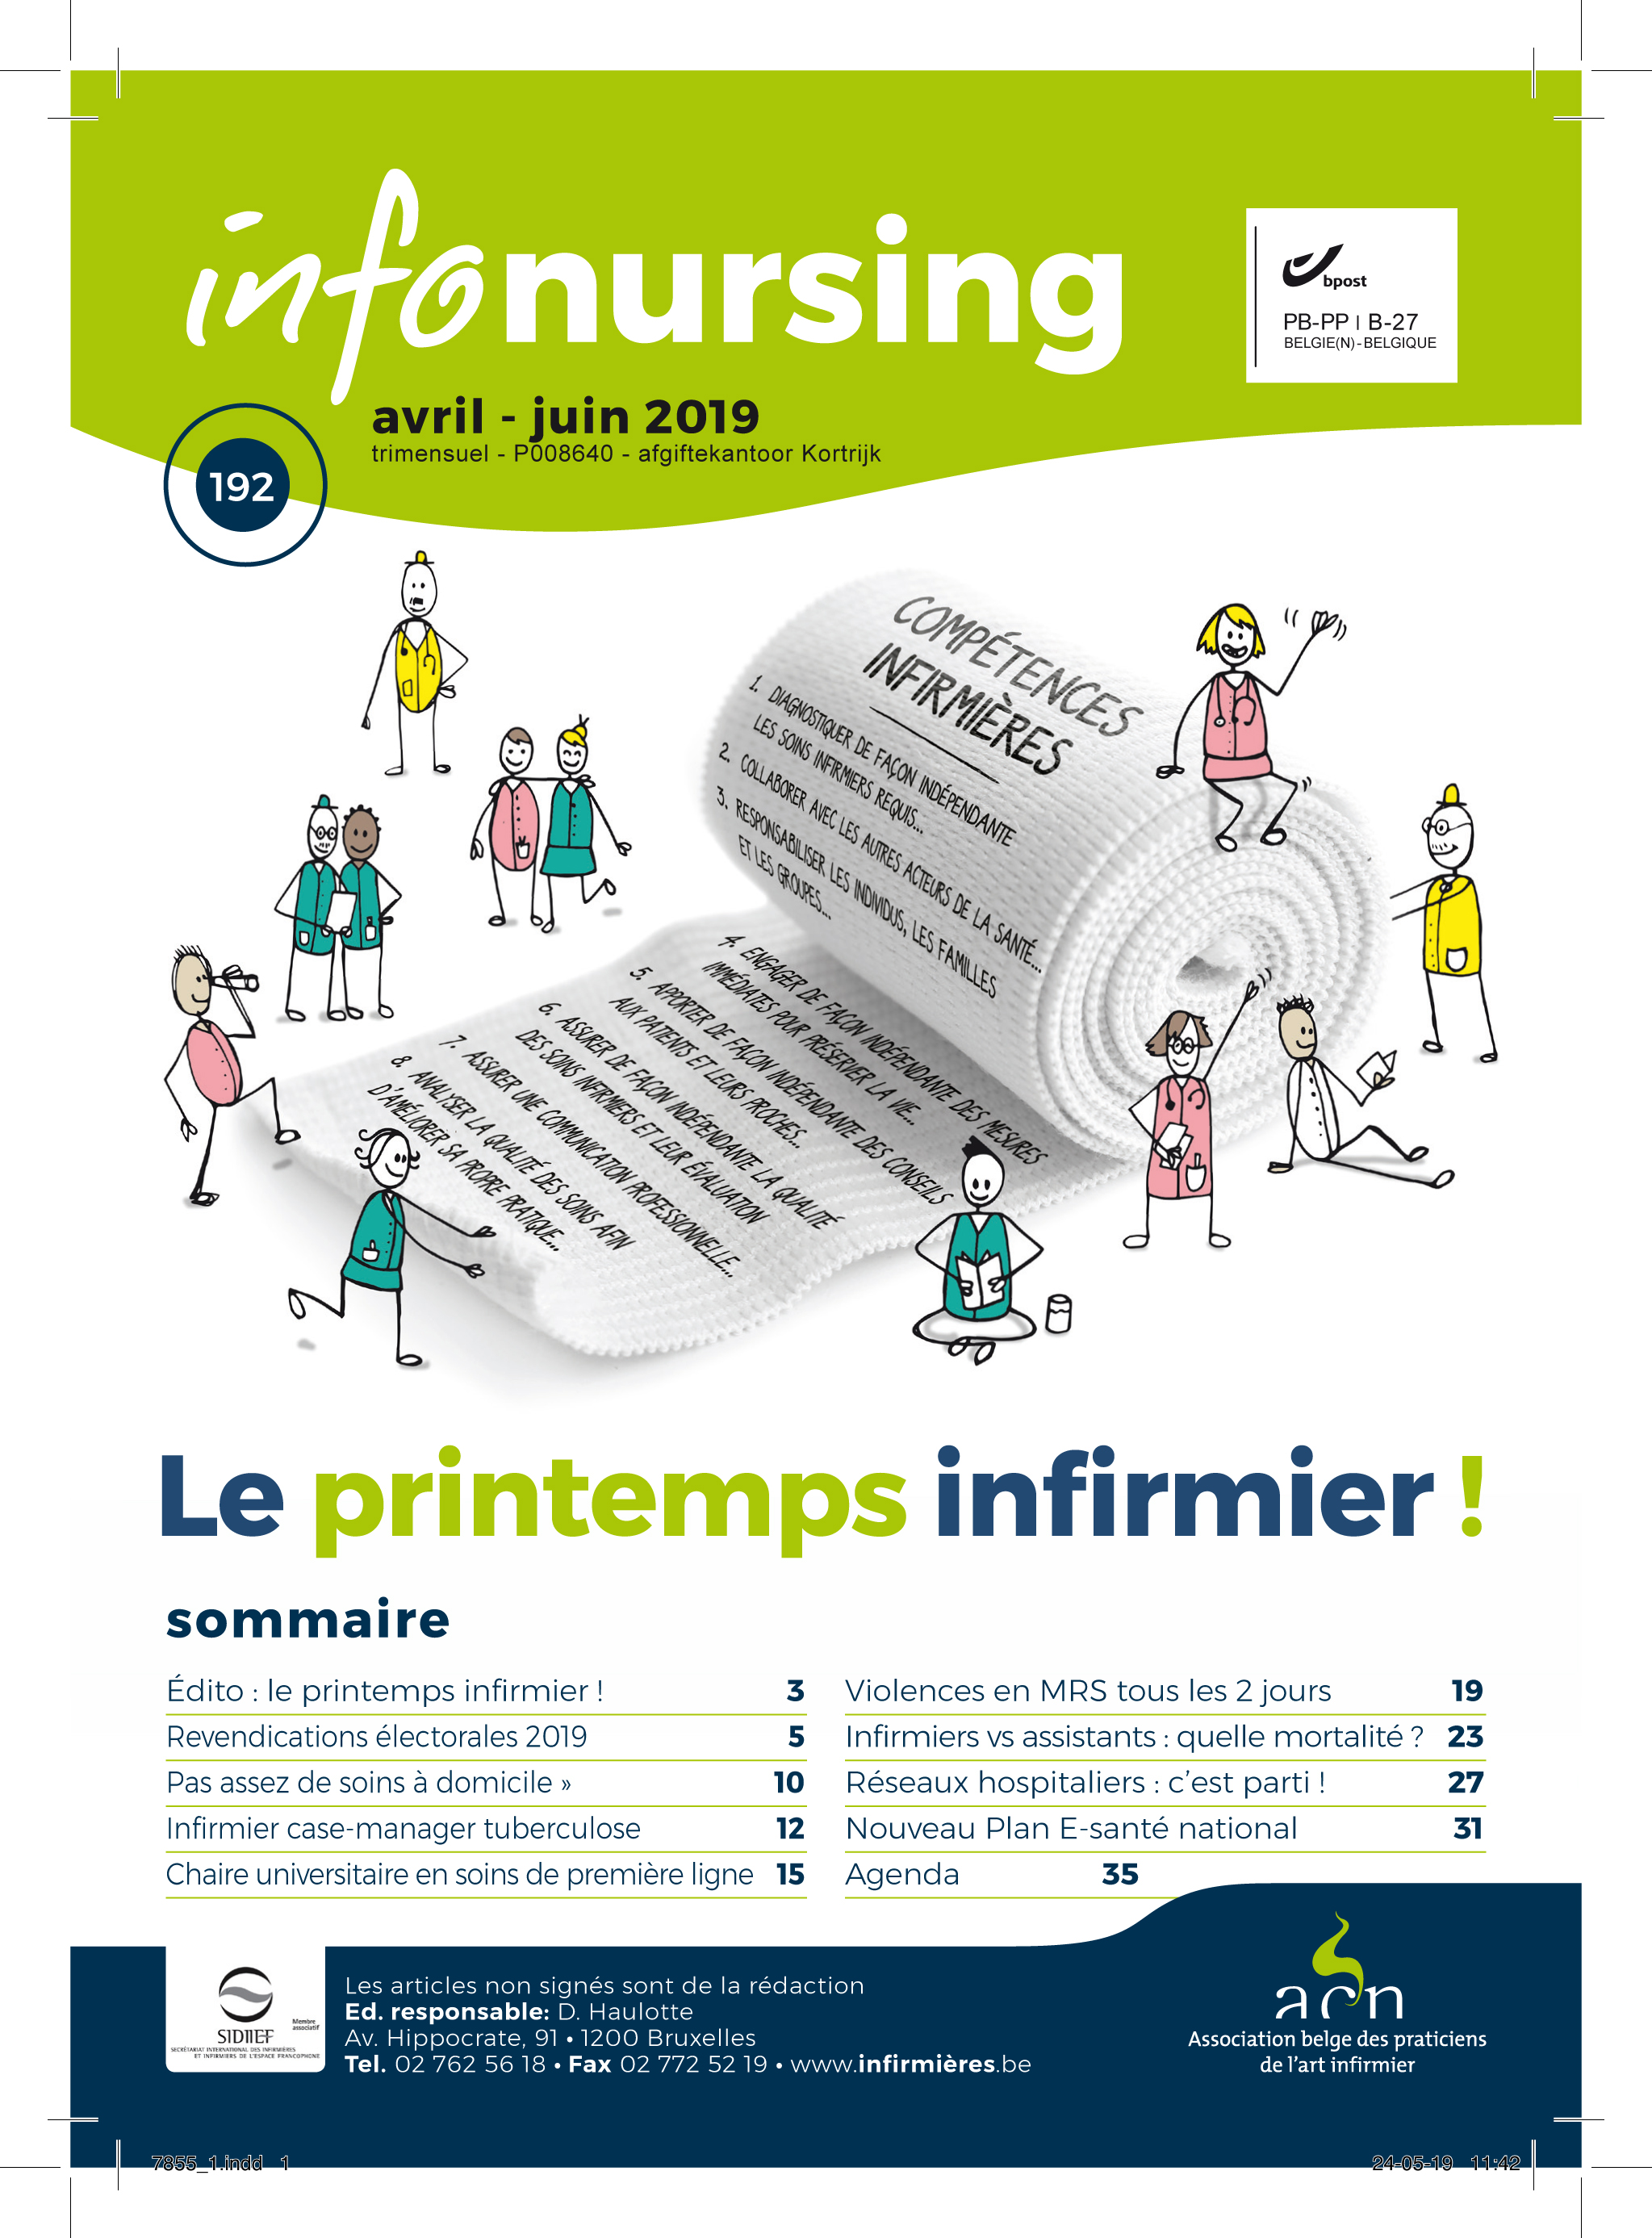 Edito Info-Nursing 192 : Le printemps infirmier !